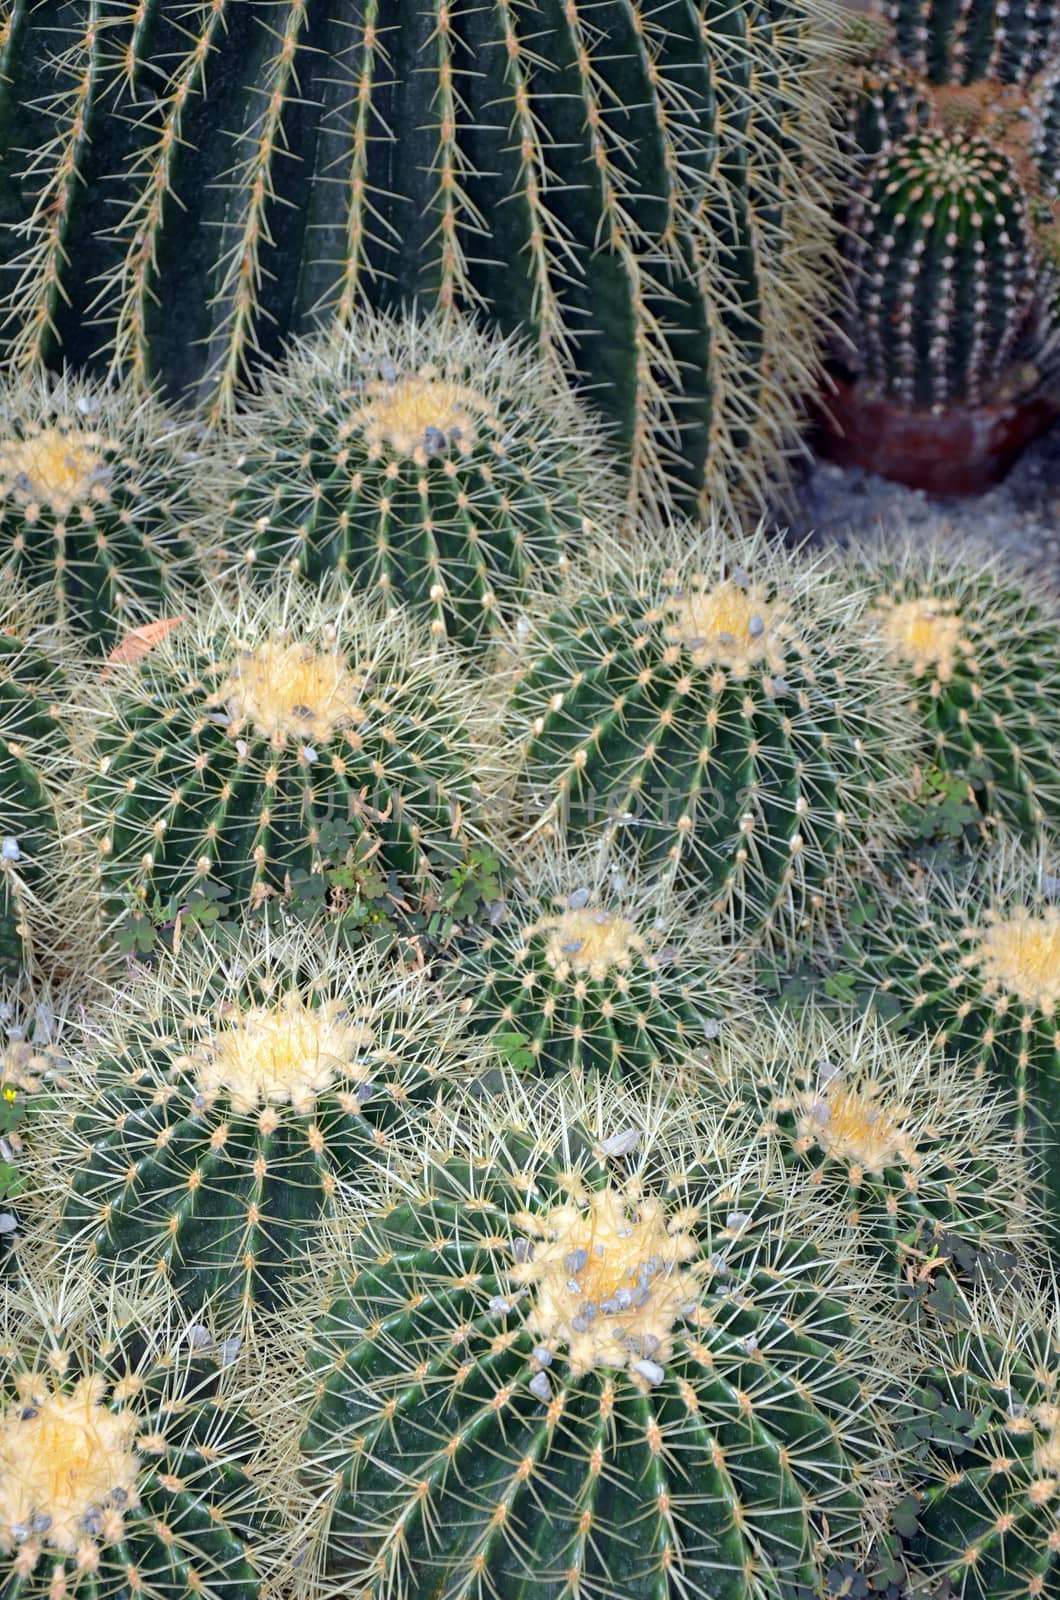 Prickly golden barrel cactus garden